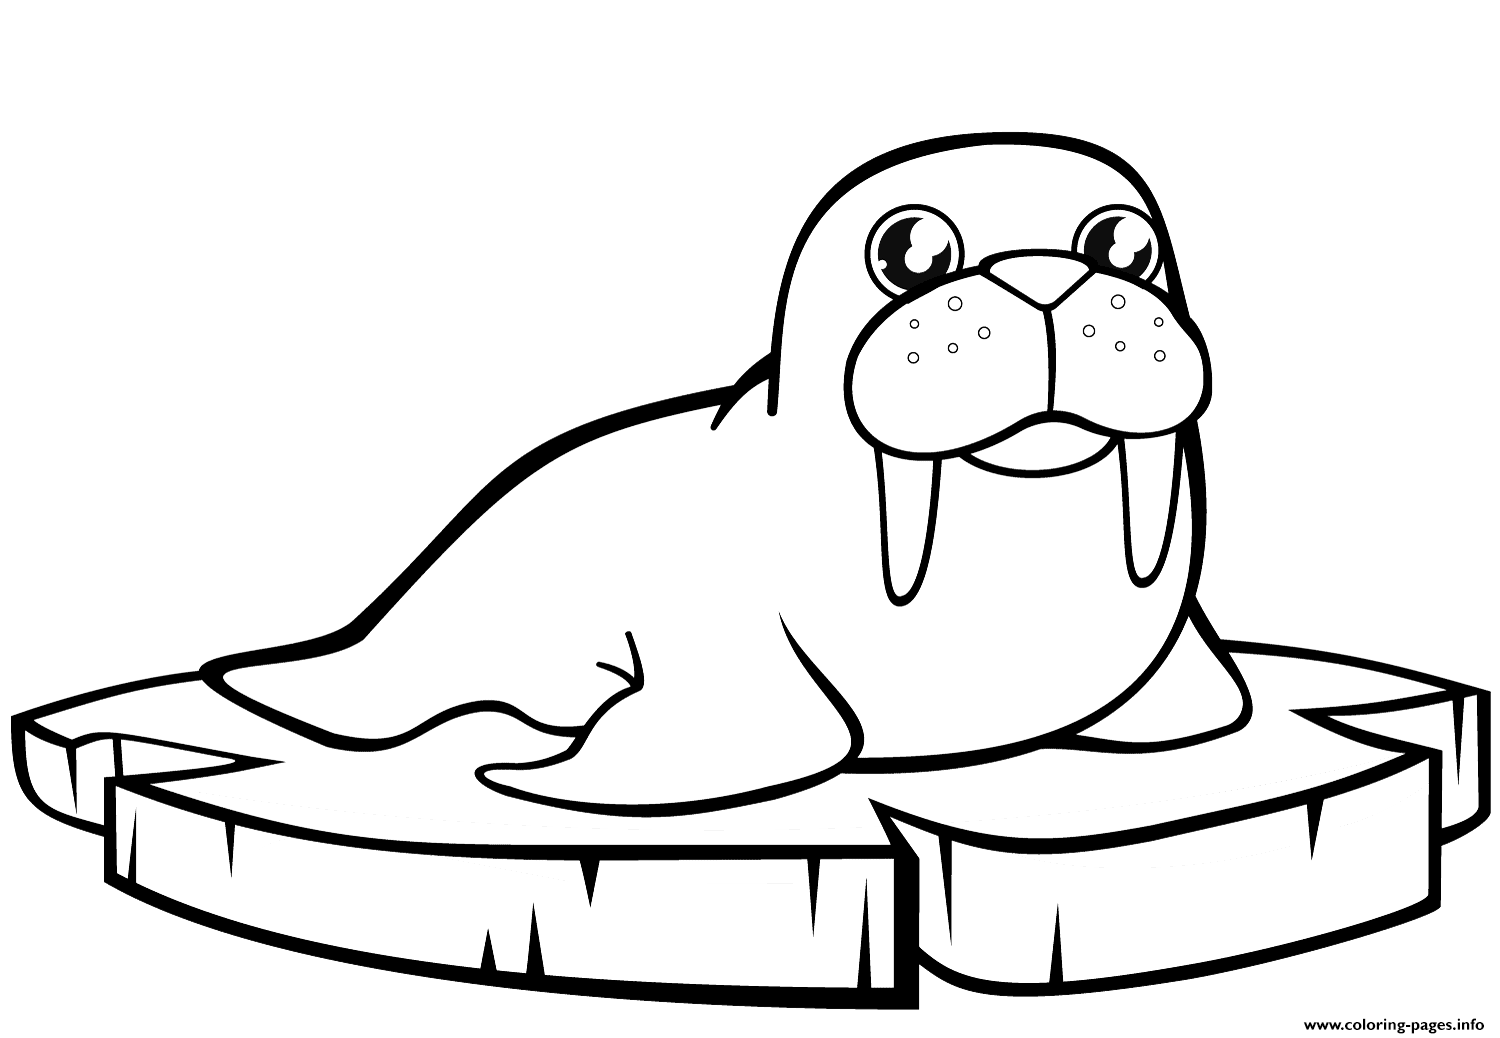 Cartoon Walrus On The Ice Floe coloring